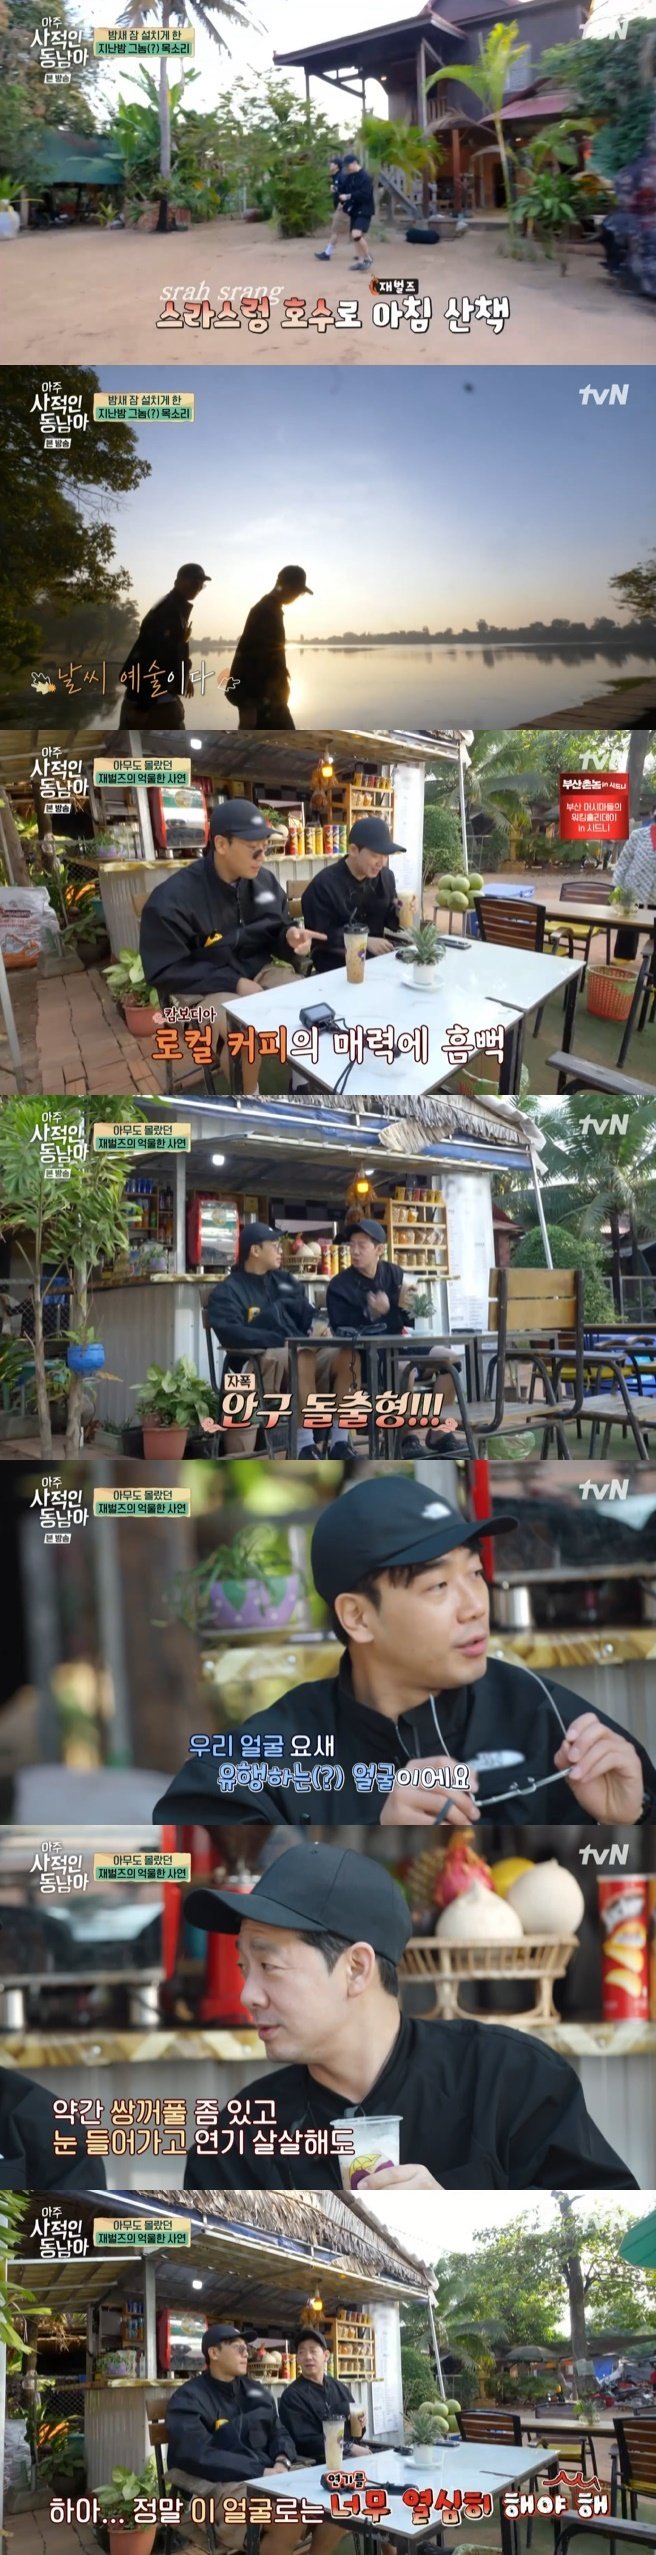 tvN '아주 사적인 동남아' 캡처